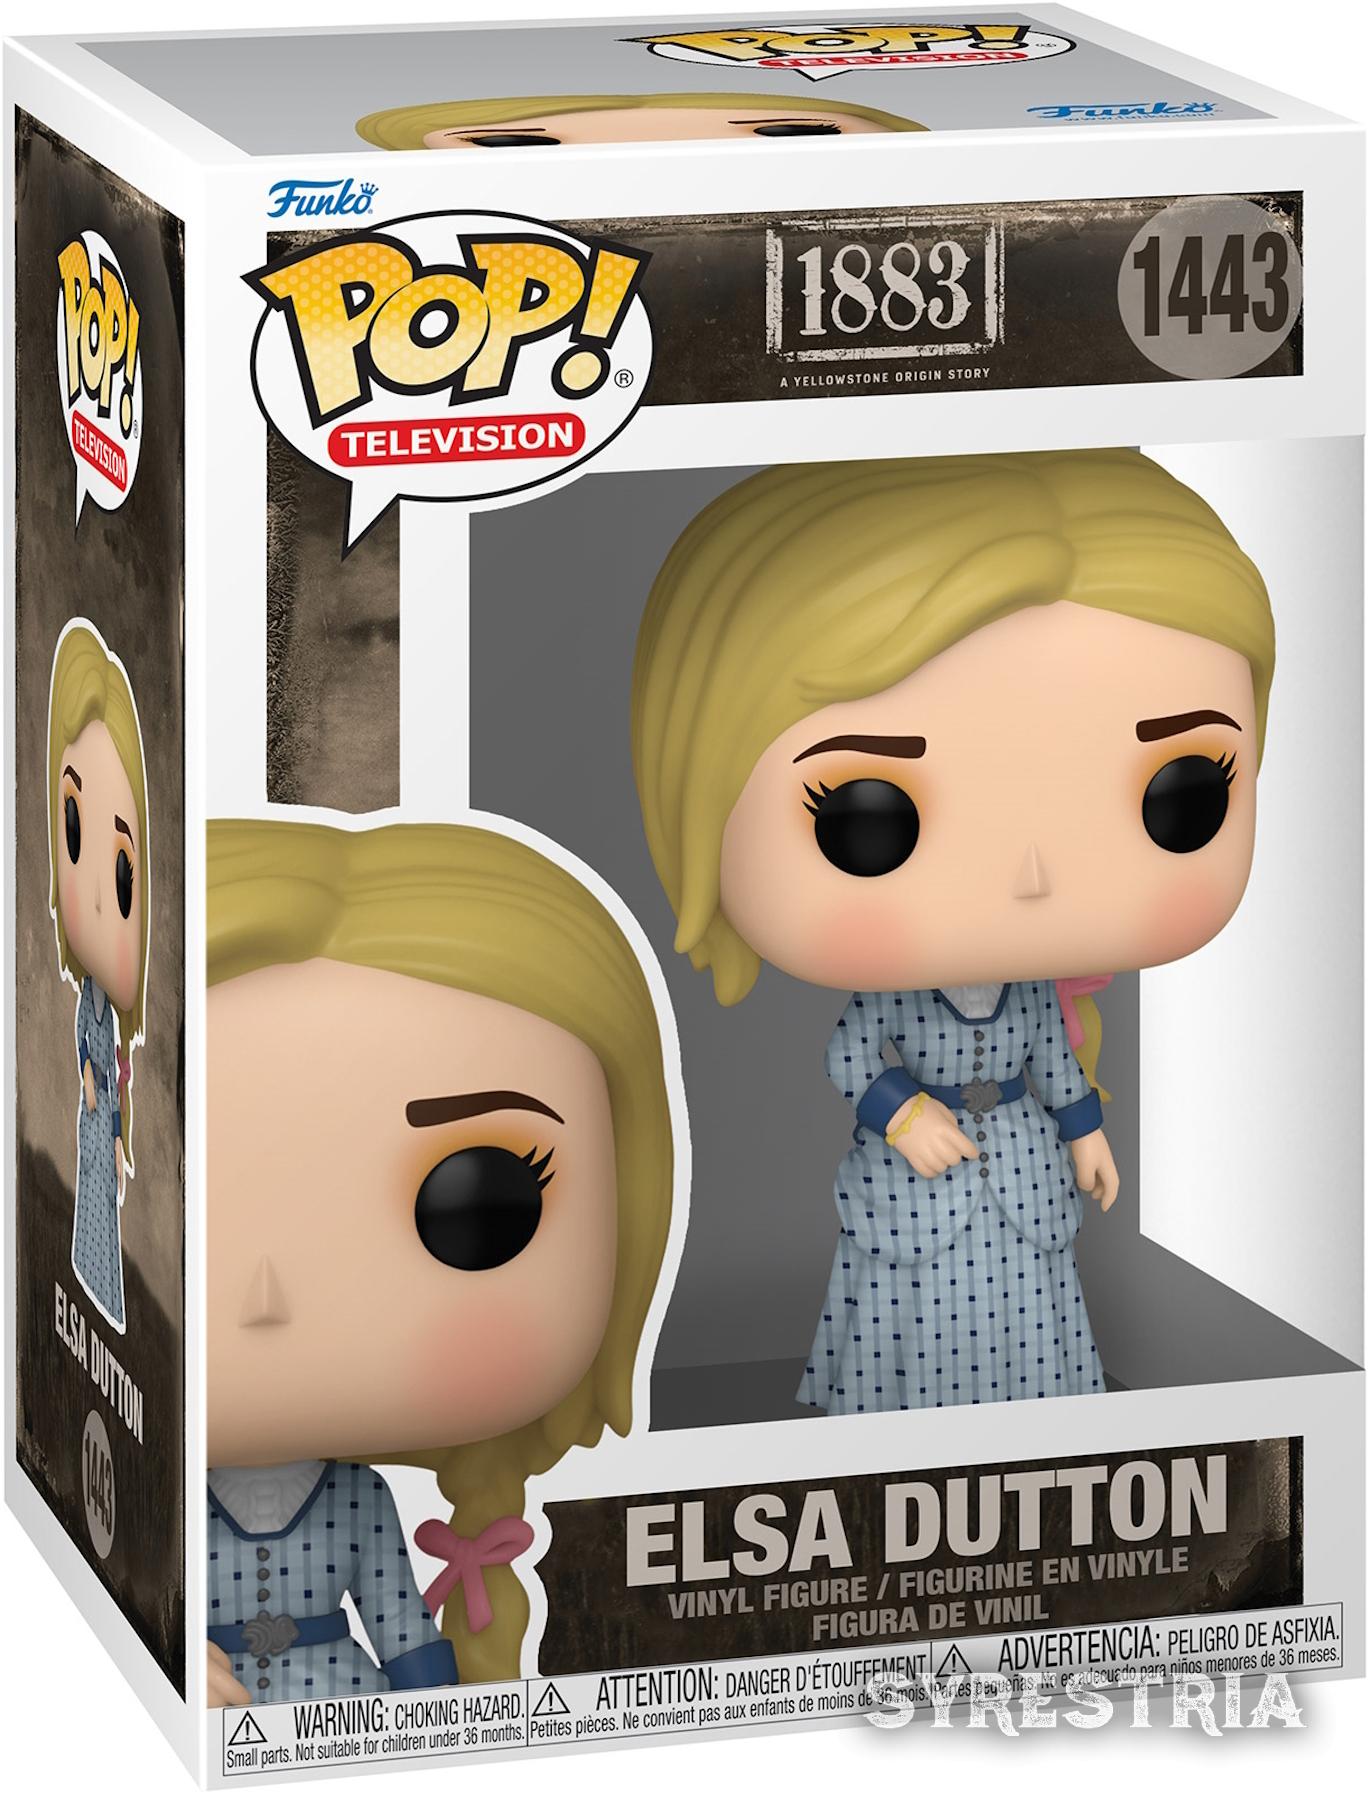 1883 - Elsa Dutton 1443  - Funko Pop! Vinyl Figur